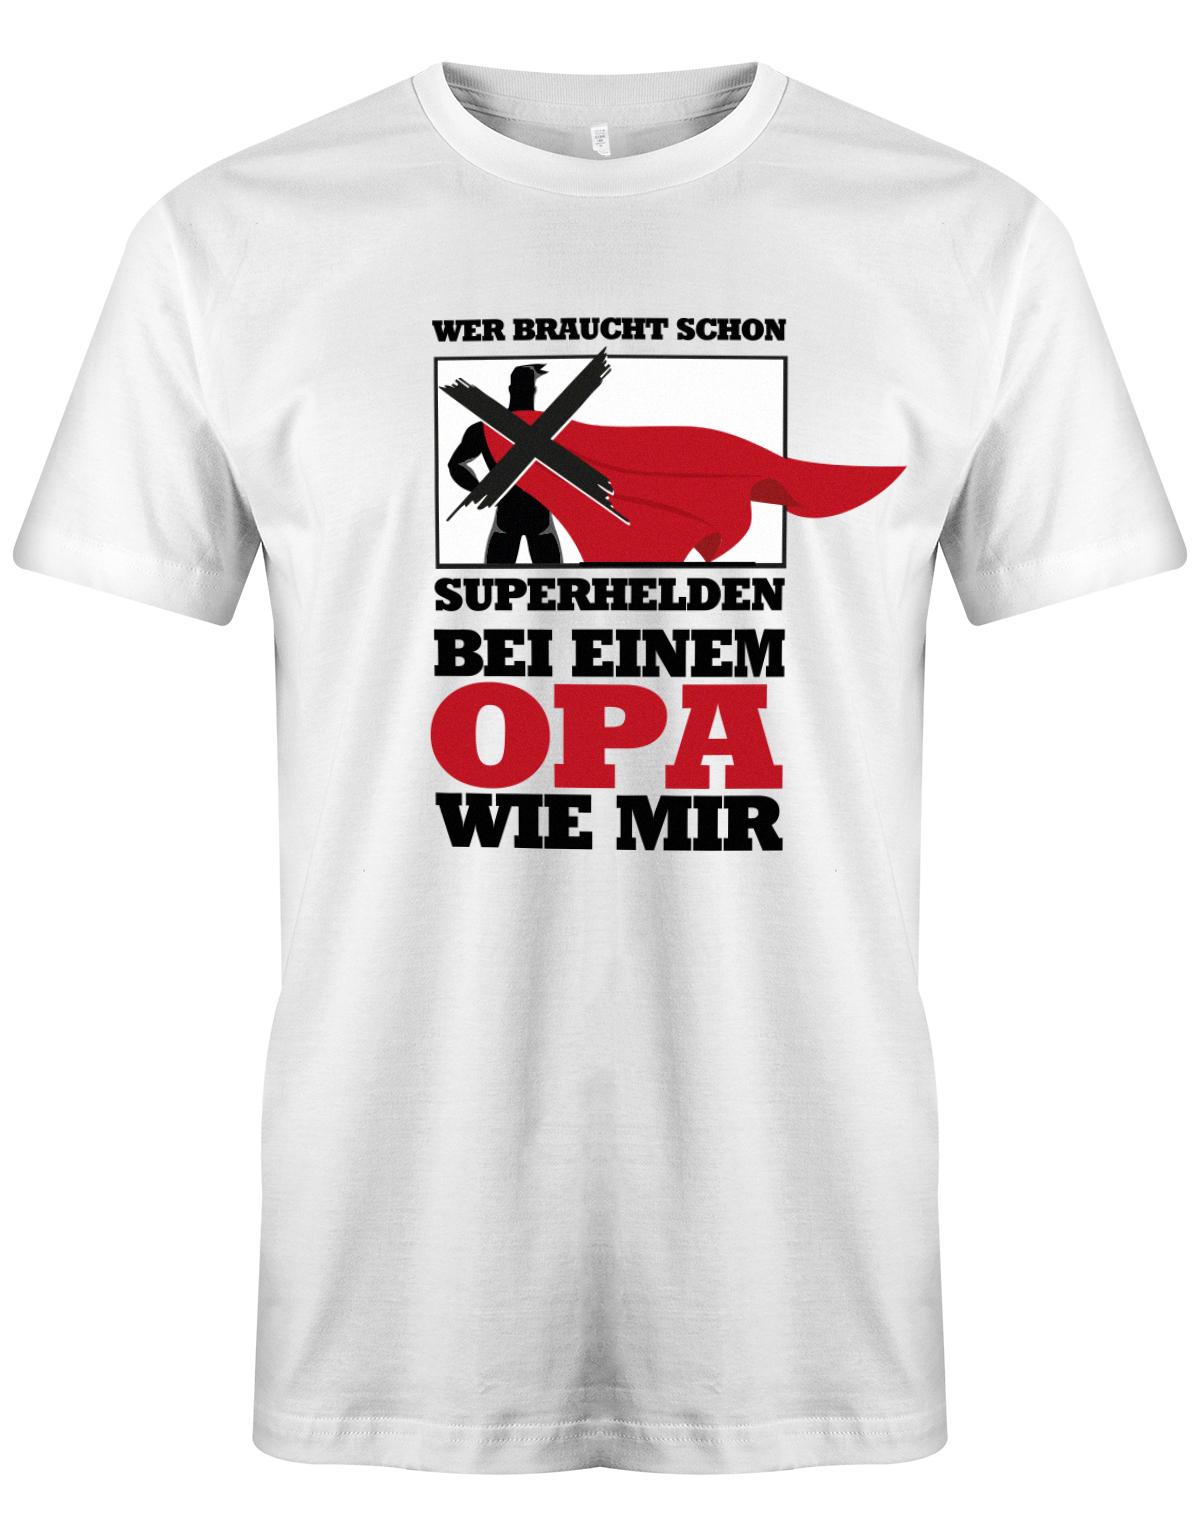 Opa T-Shirt – Wer braucht schon Superhelden bei einem Opa wie mir Weiss